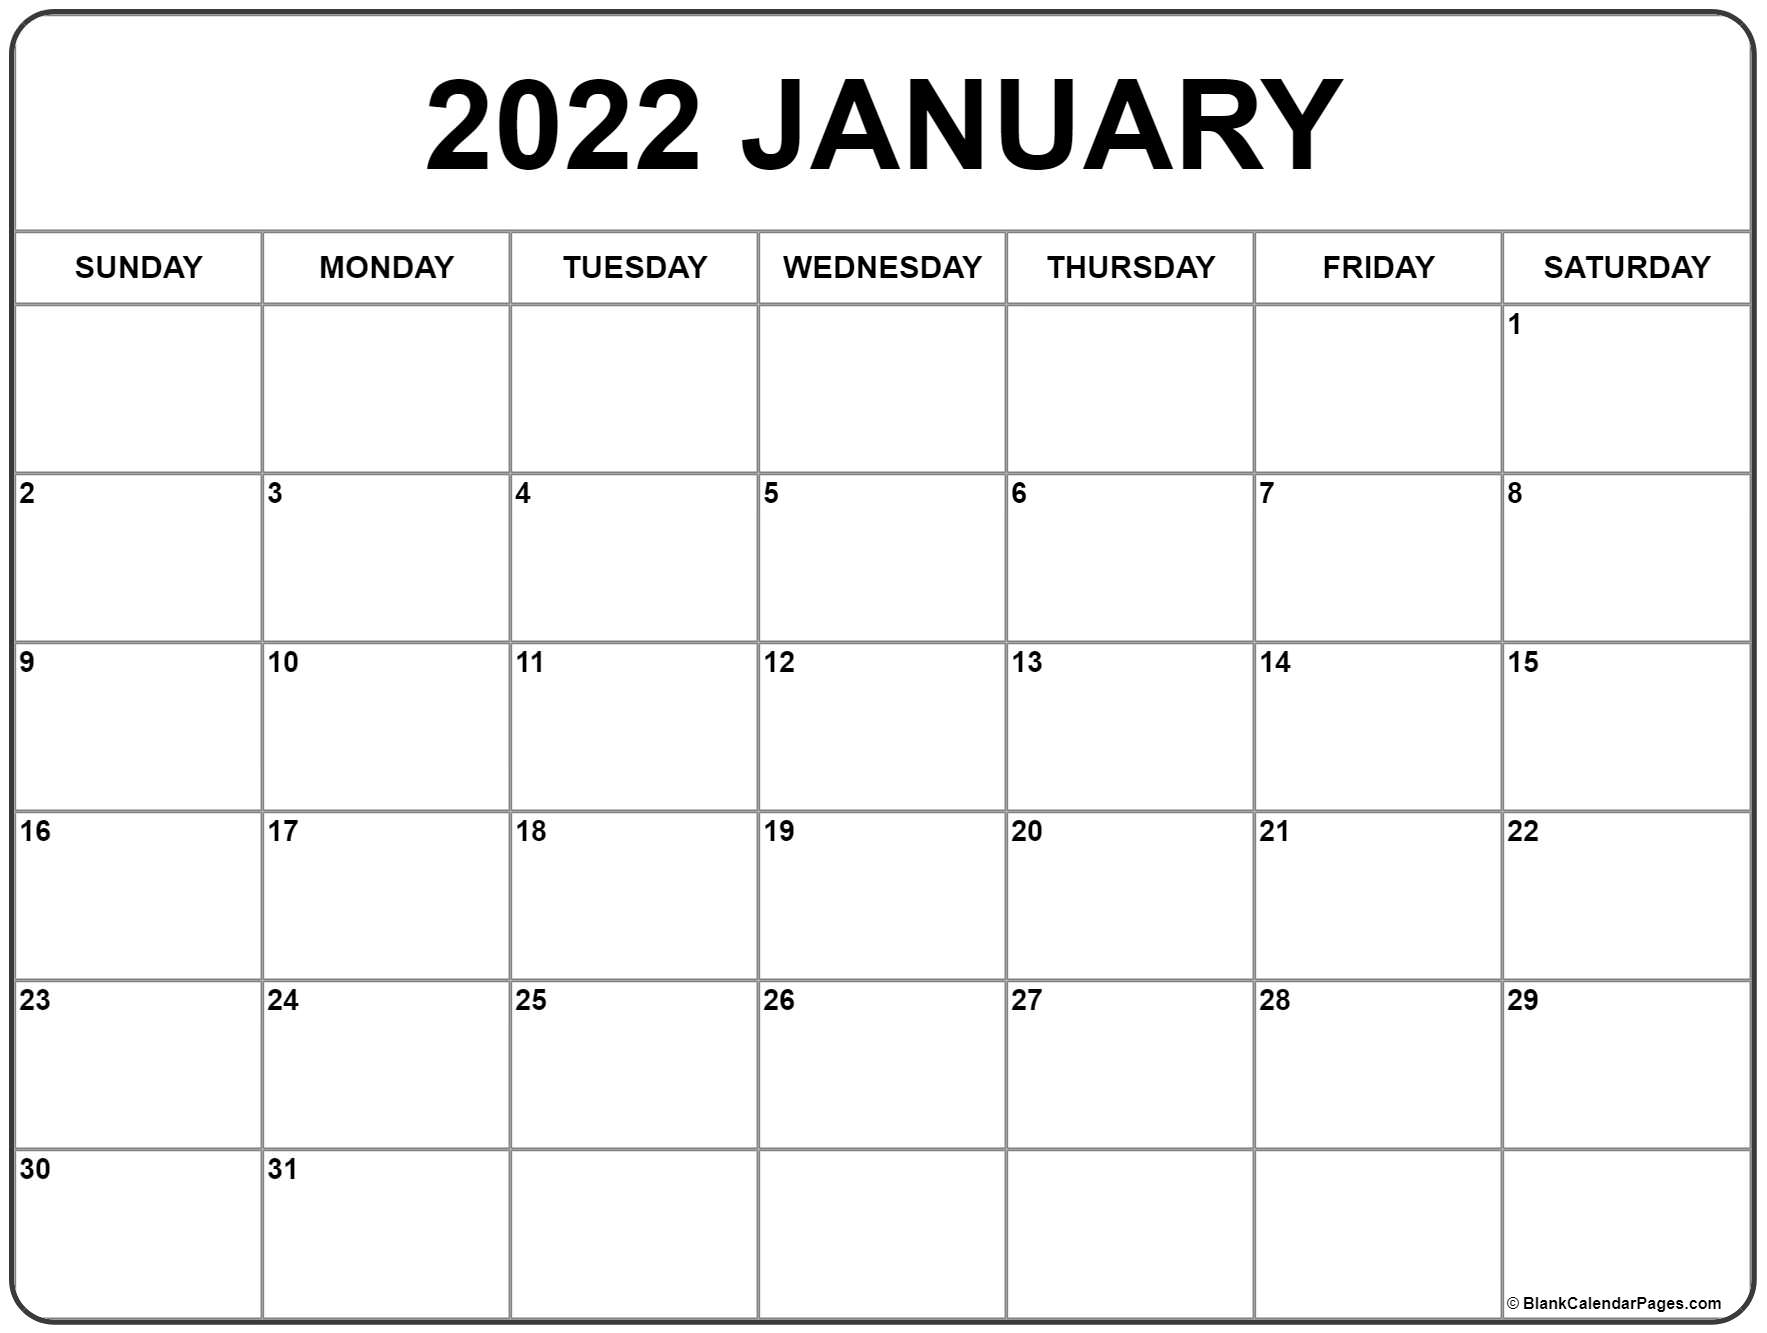 January 2022 Calendar Wallpaper